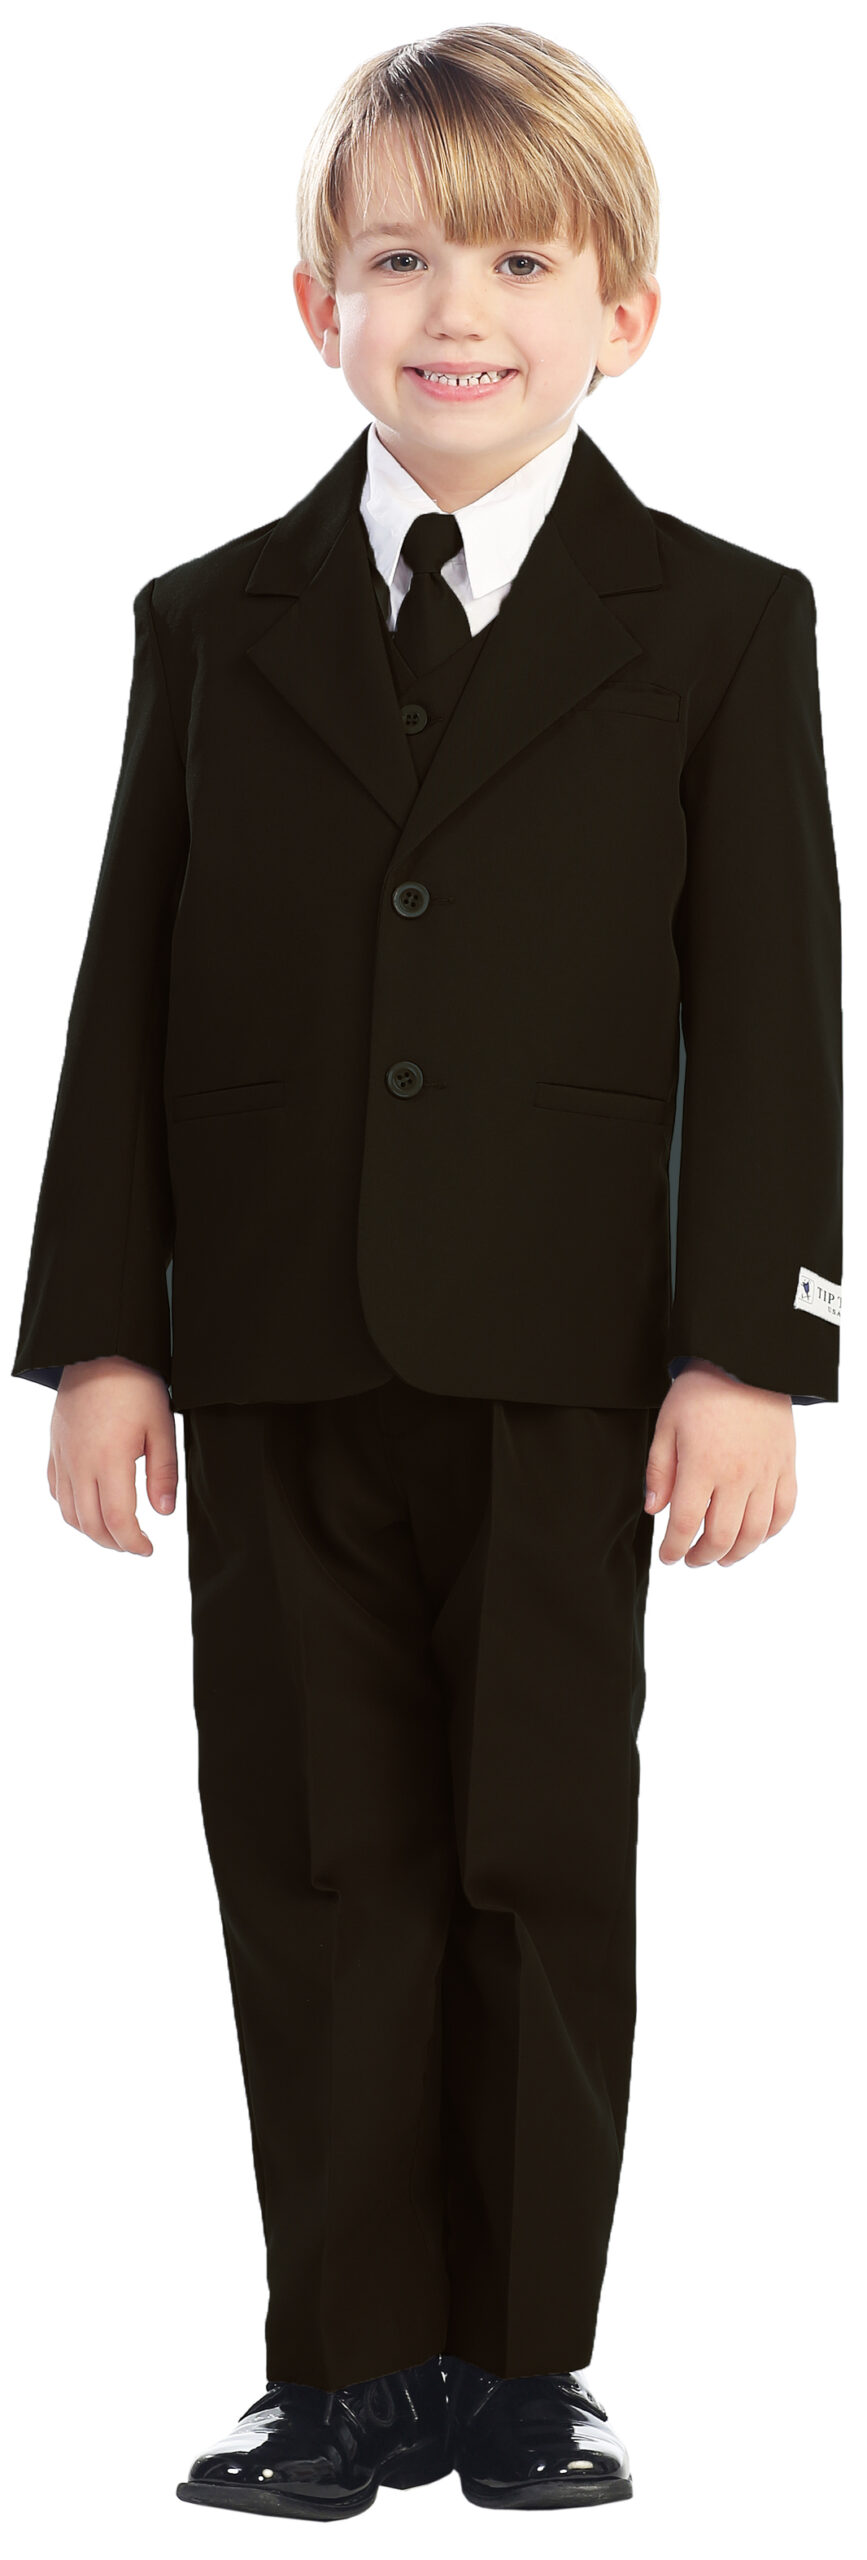 Avery Hill 5-Piece Boy's 2-Button Dress Suit Full-Back Vest - Brown Size 10